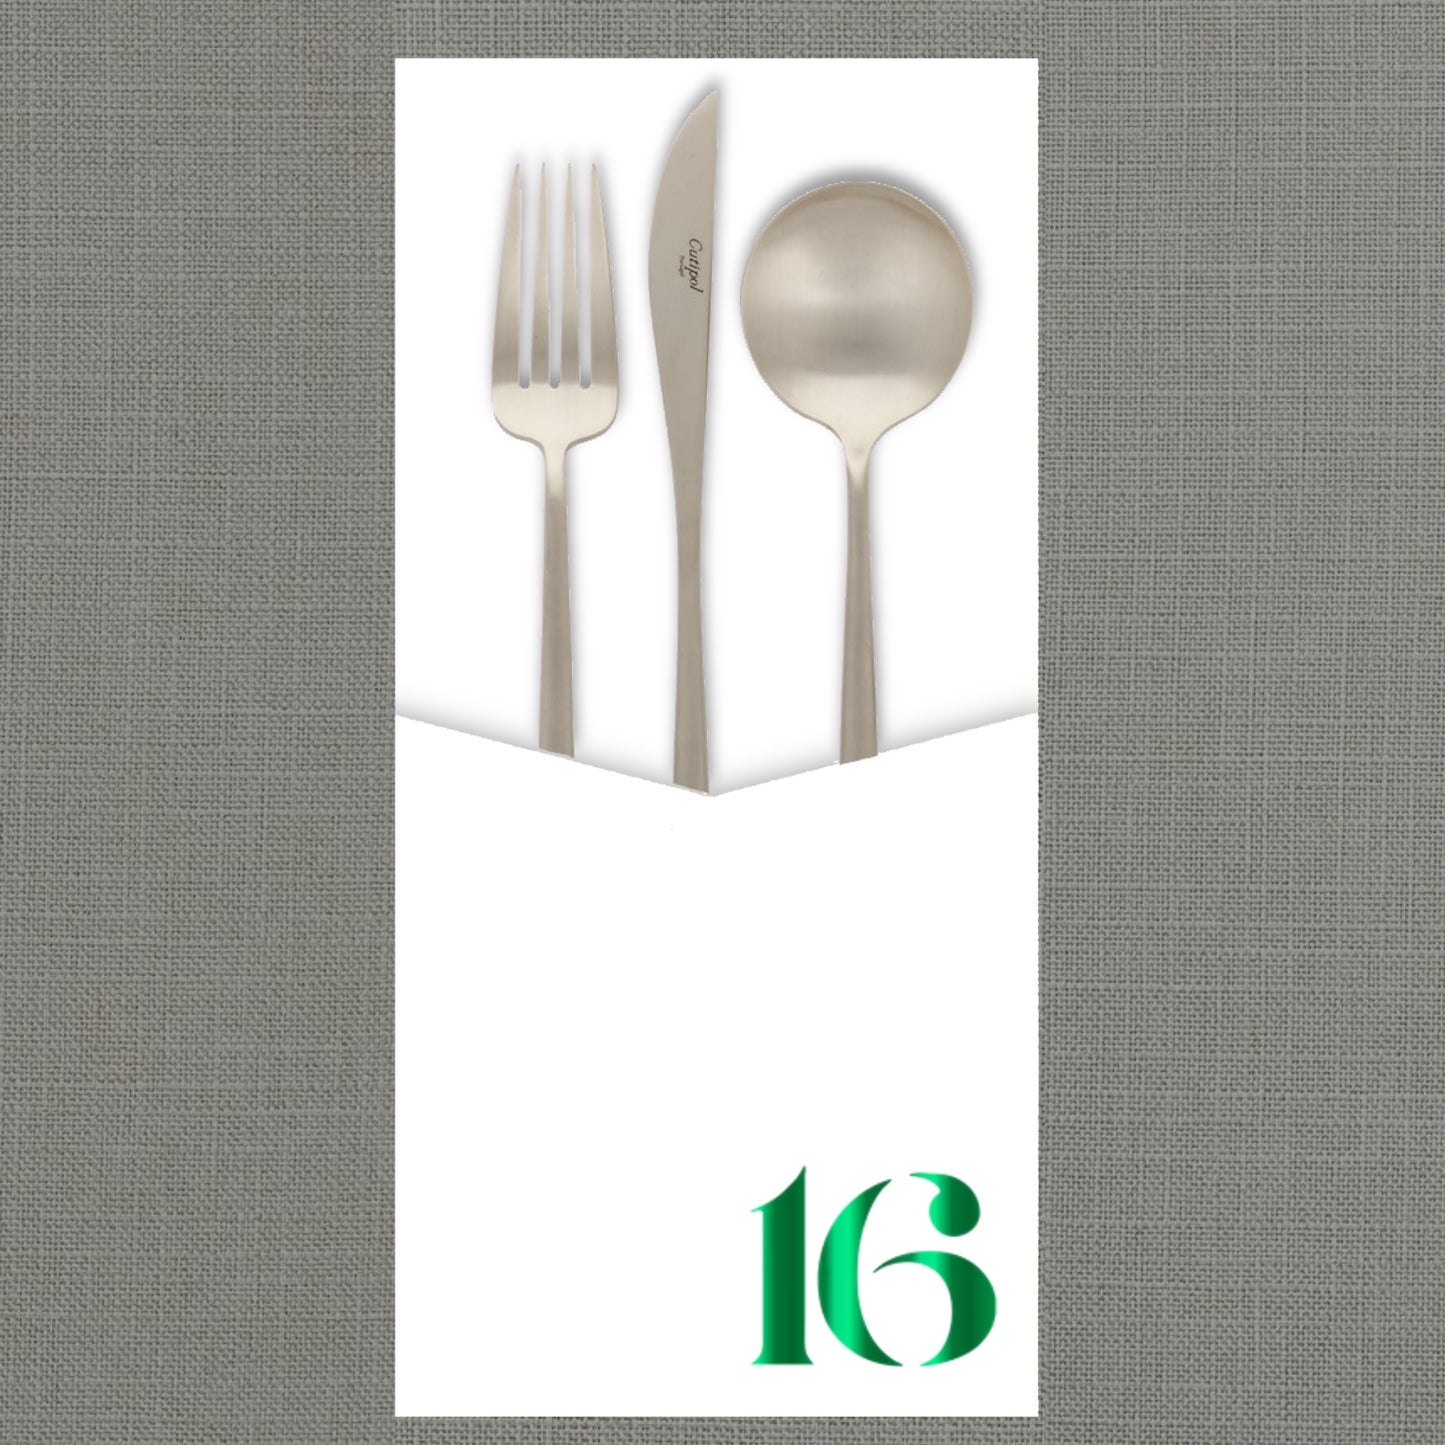 Foil Celebrate! 16 - Cutlery Pouch